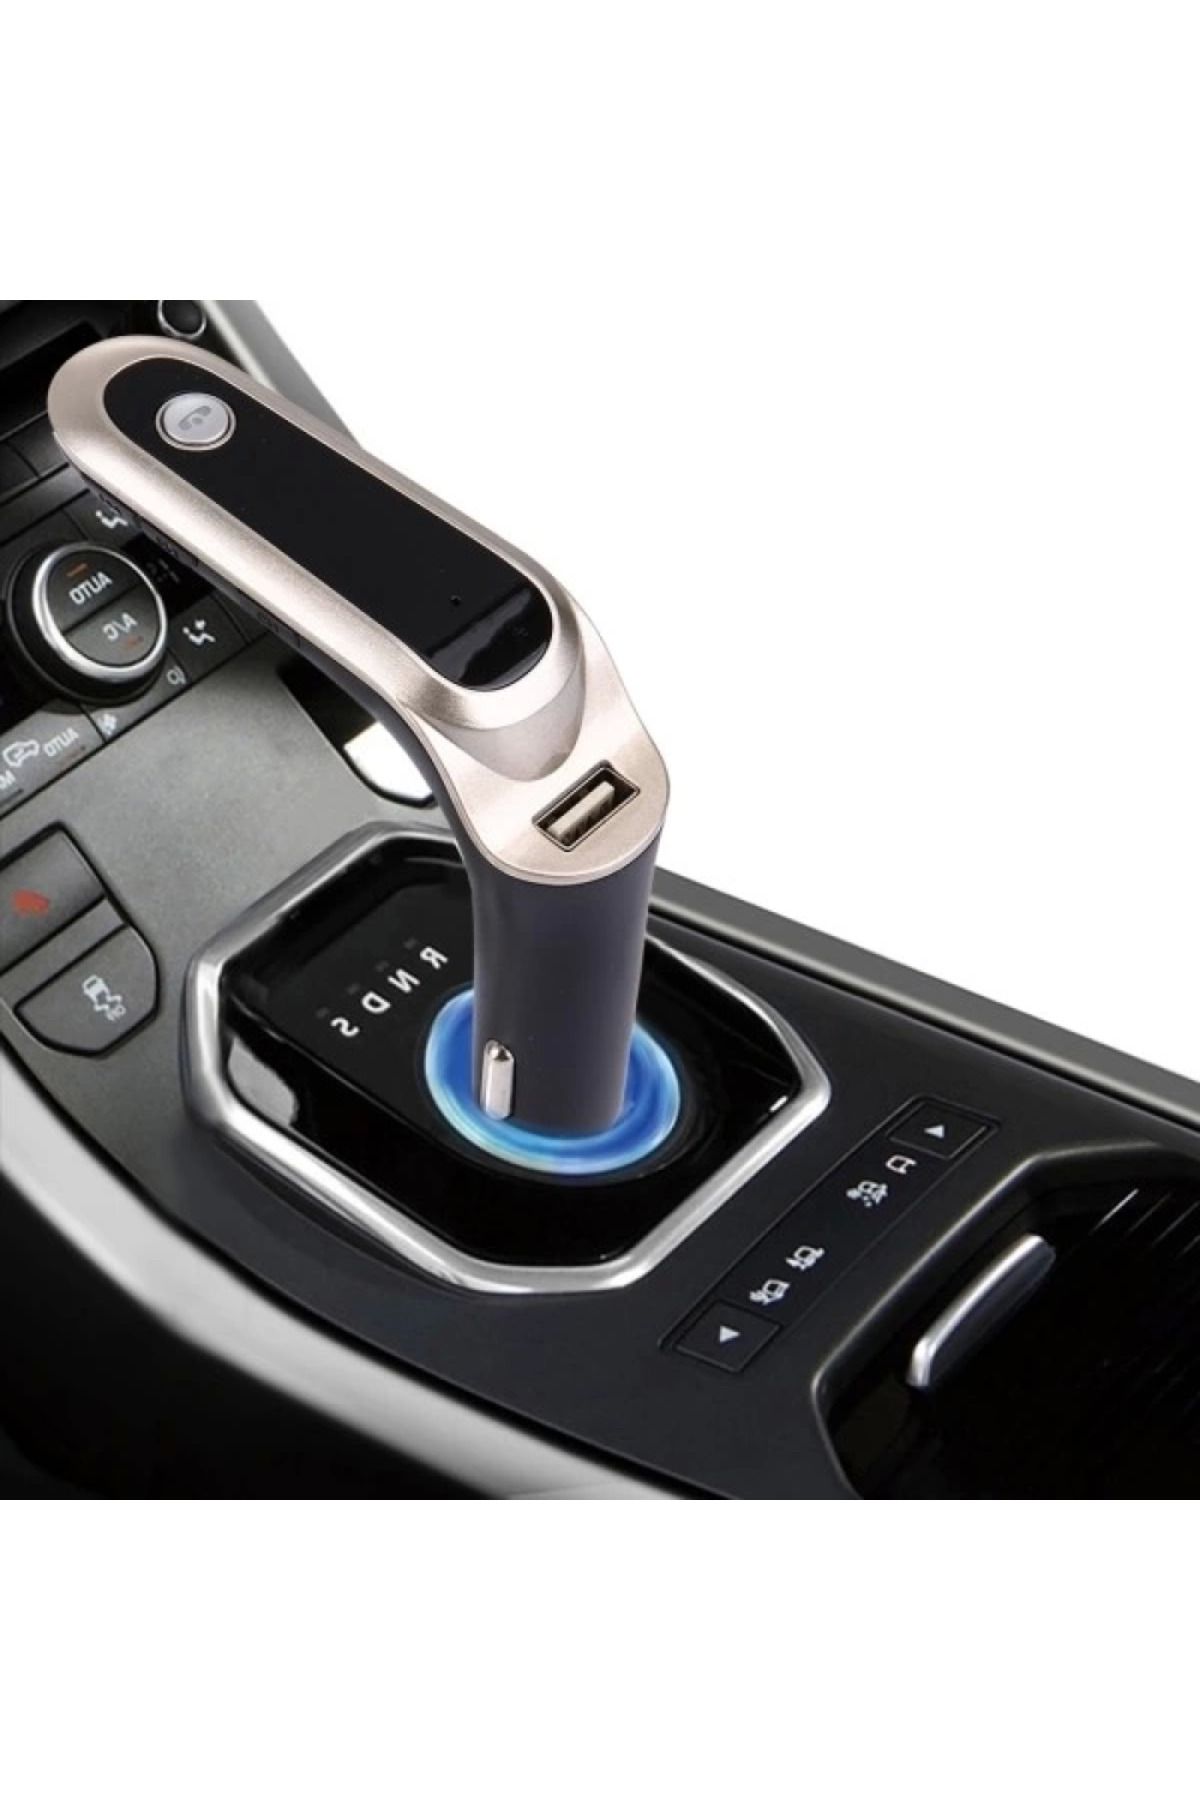 iremciii Cars7 Bluetooth Hafıza Kart Girişli 4.0 Araç Kiti Çakmaklık Mp3 Fm Transmitter